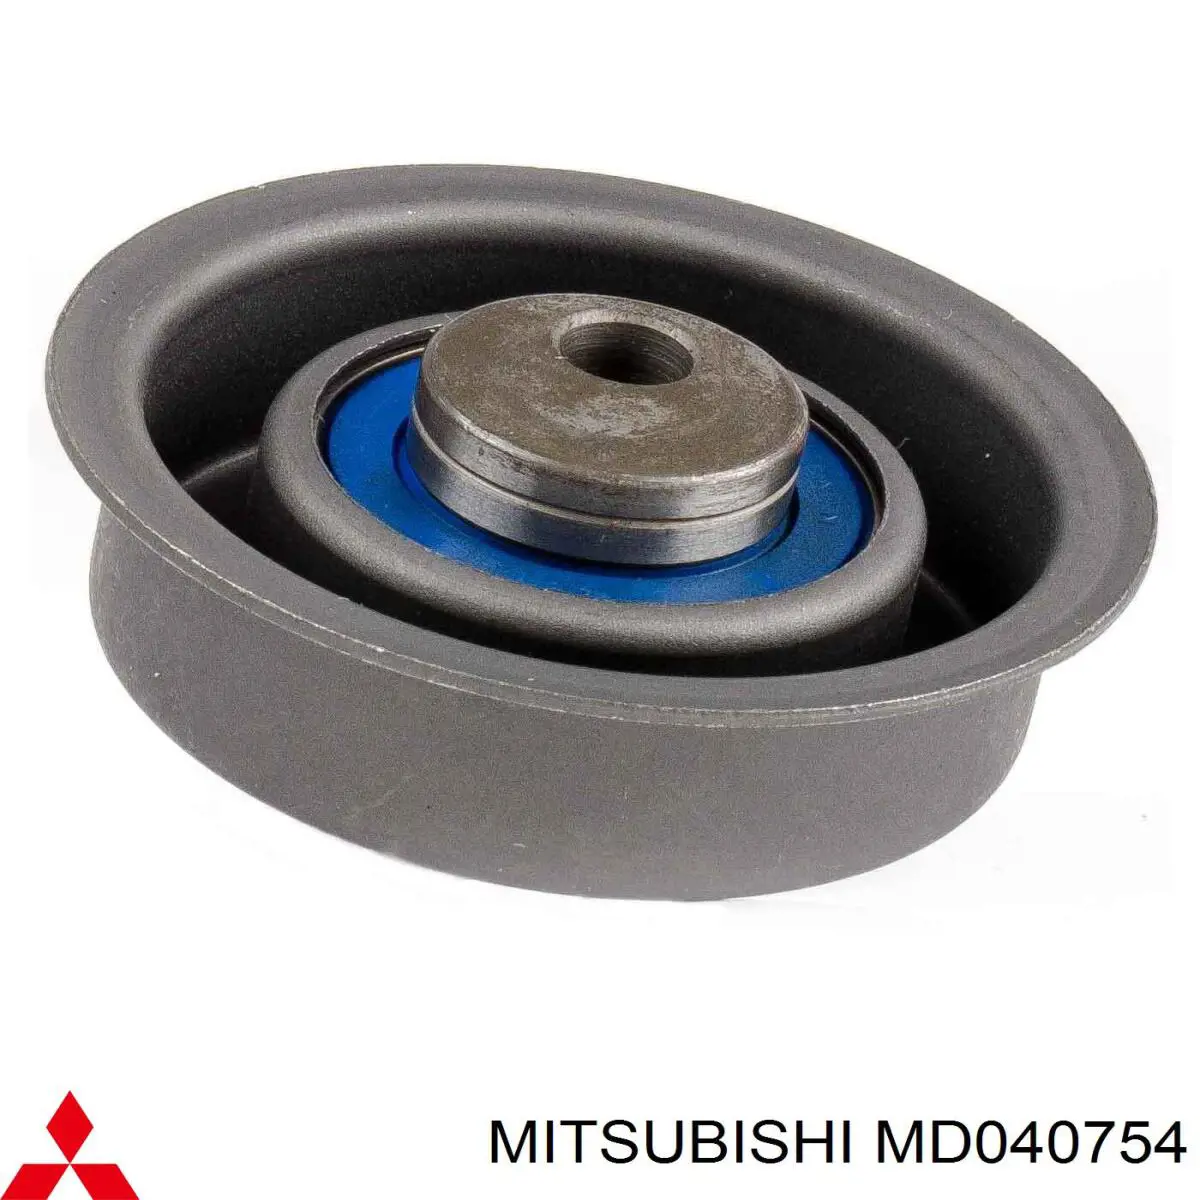 MD040754 Mitsubishi polea tensora, correa dentada, eje de balanceo